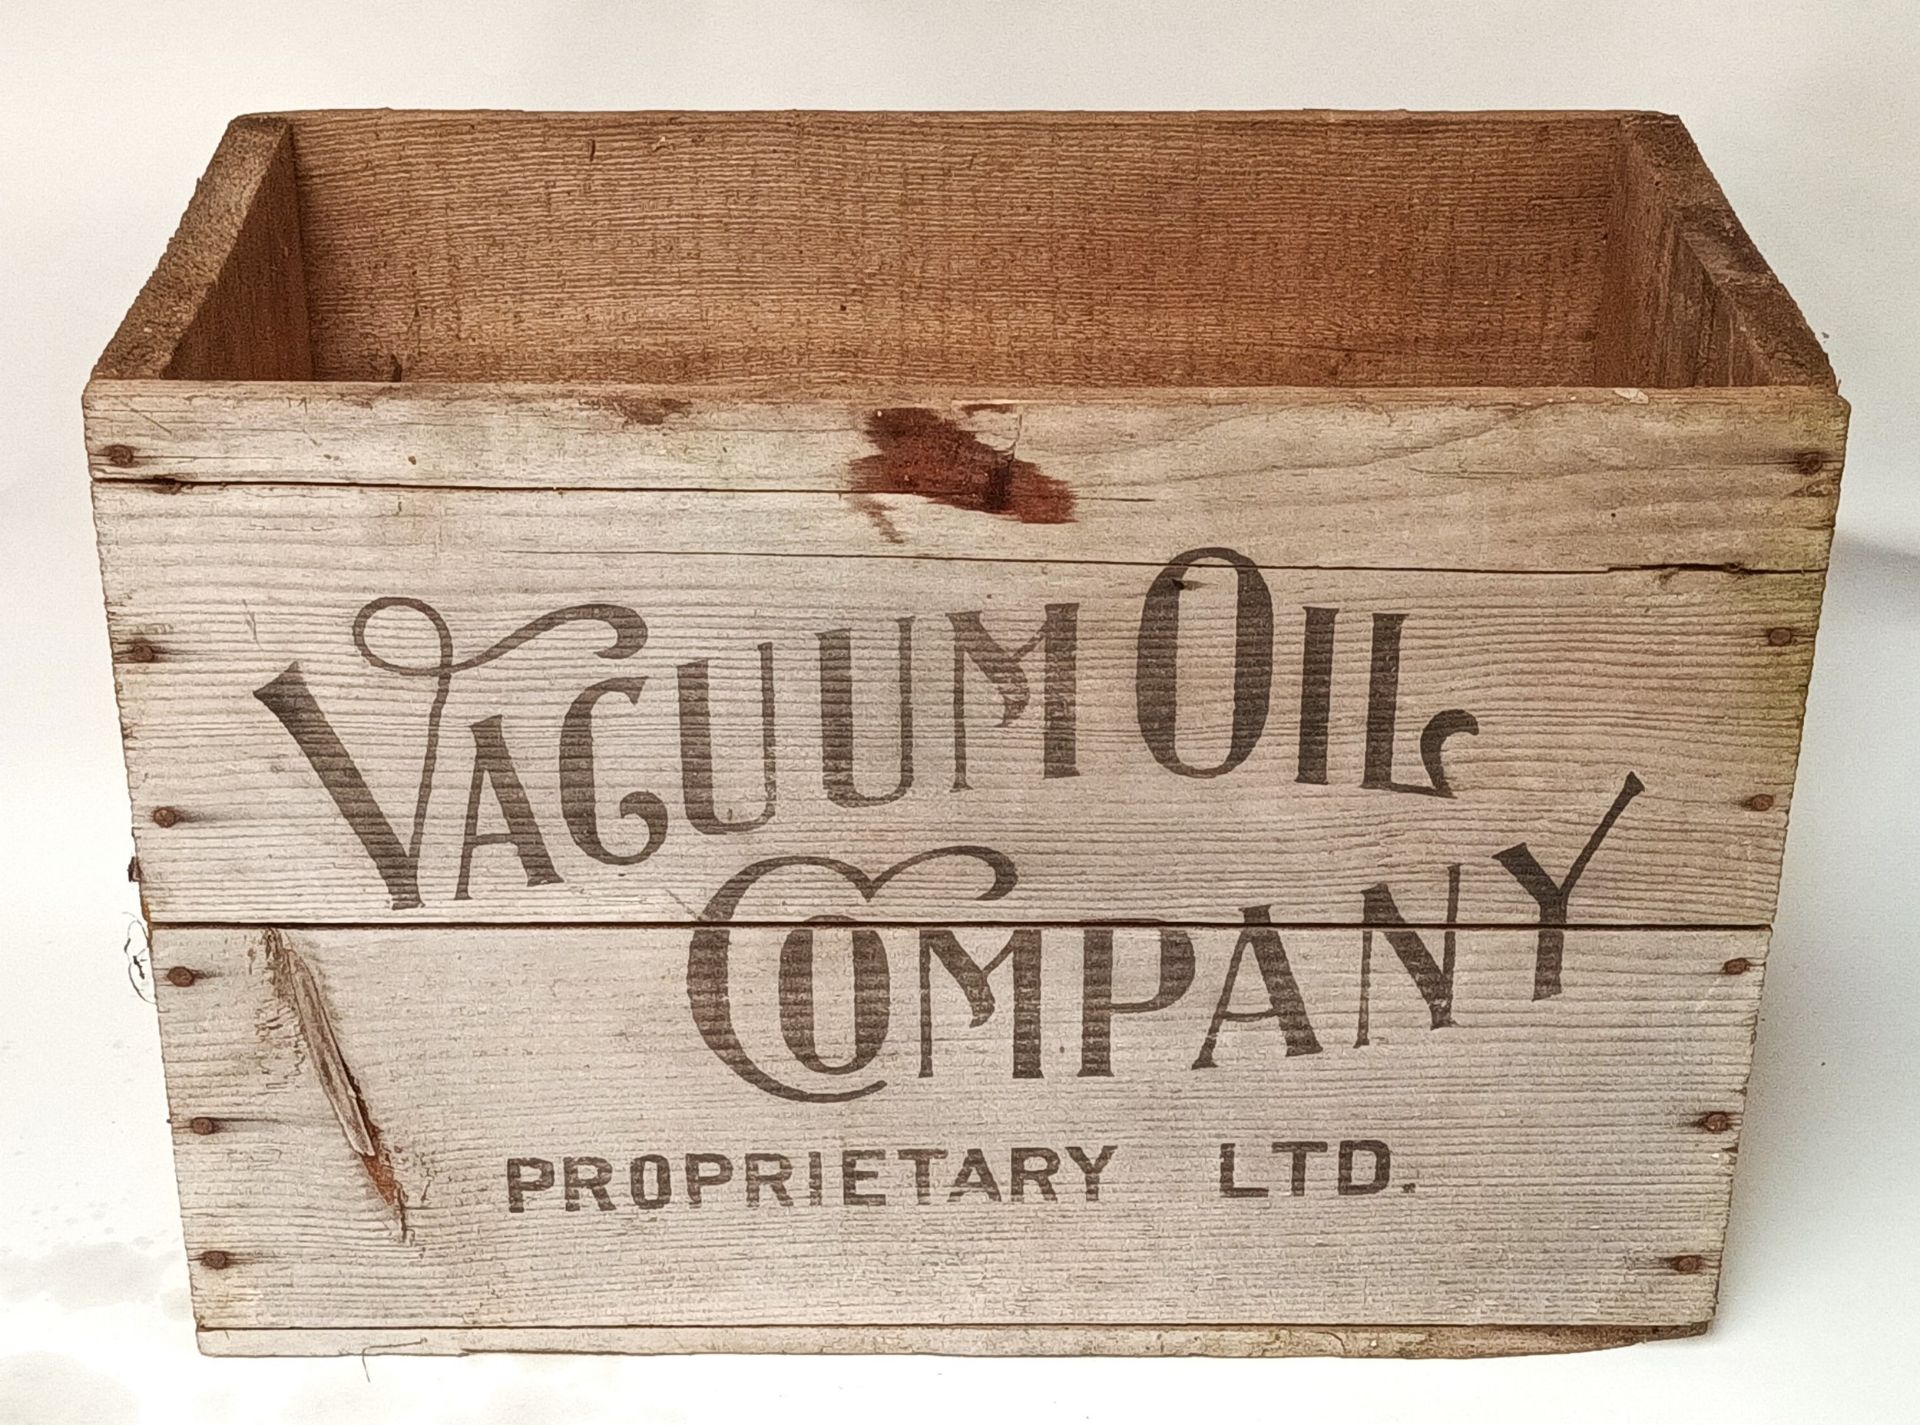 A New Zealand Vacuum Oil Company/Plume Motor Spirit wooden crate, 53 x 26 x 37cm